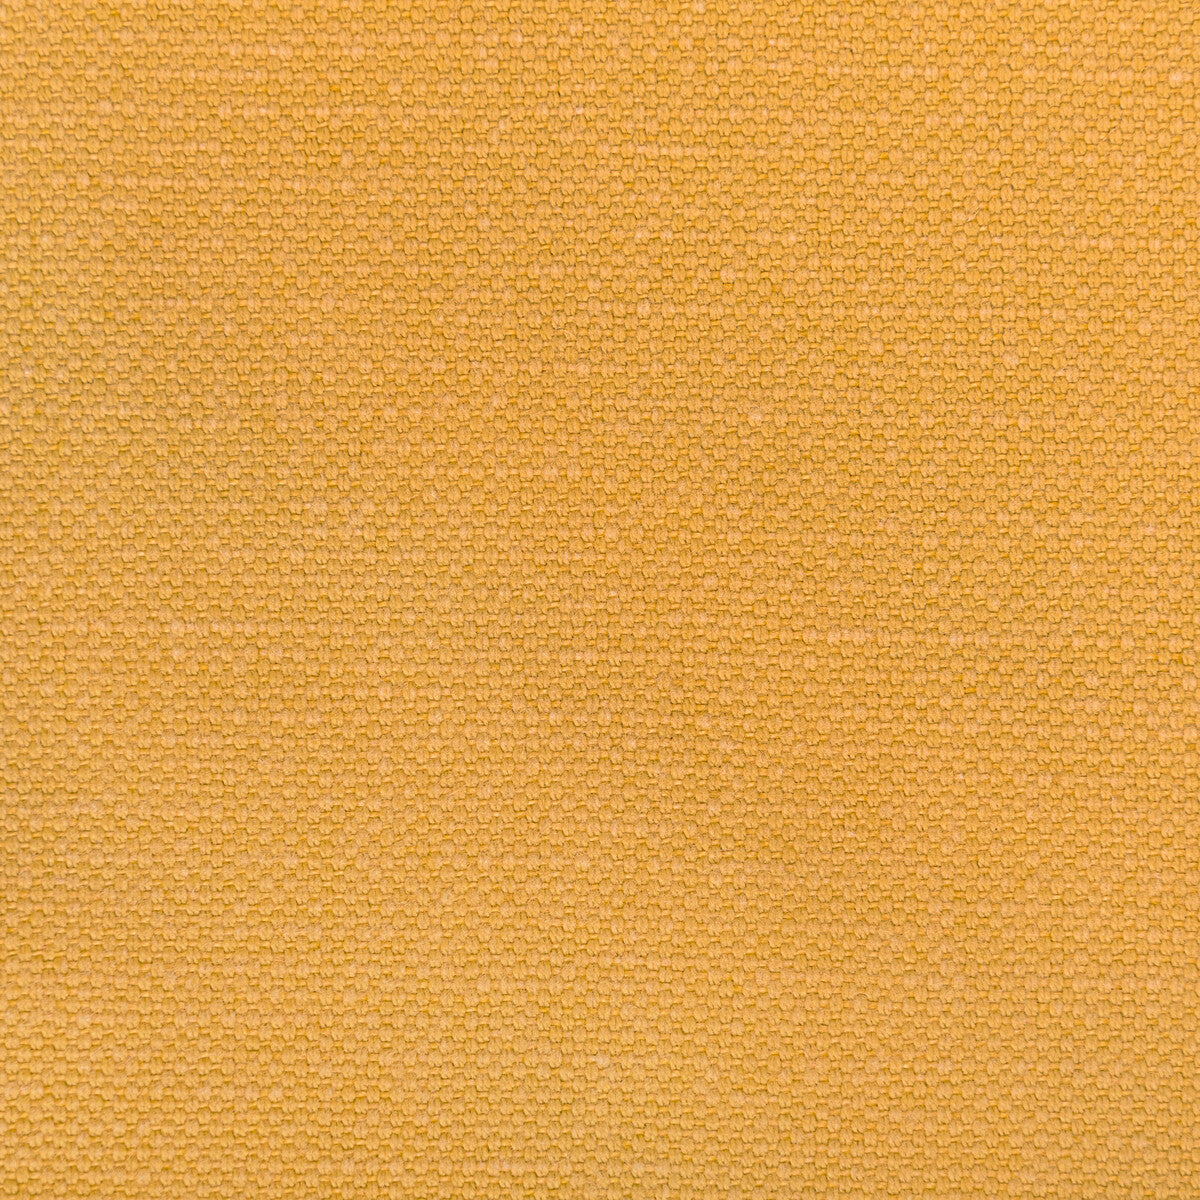 Carson fabric in honey color - pattern 36282.4.0 - by Kravet Basics